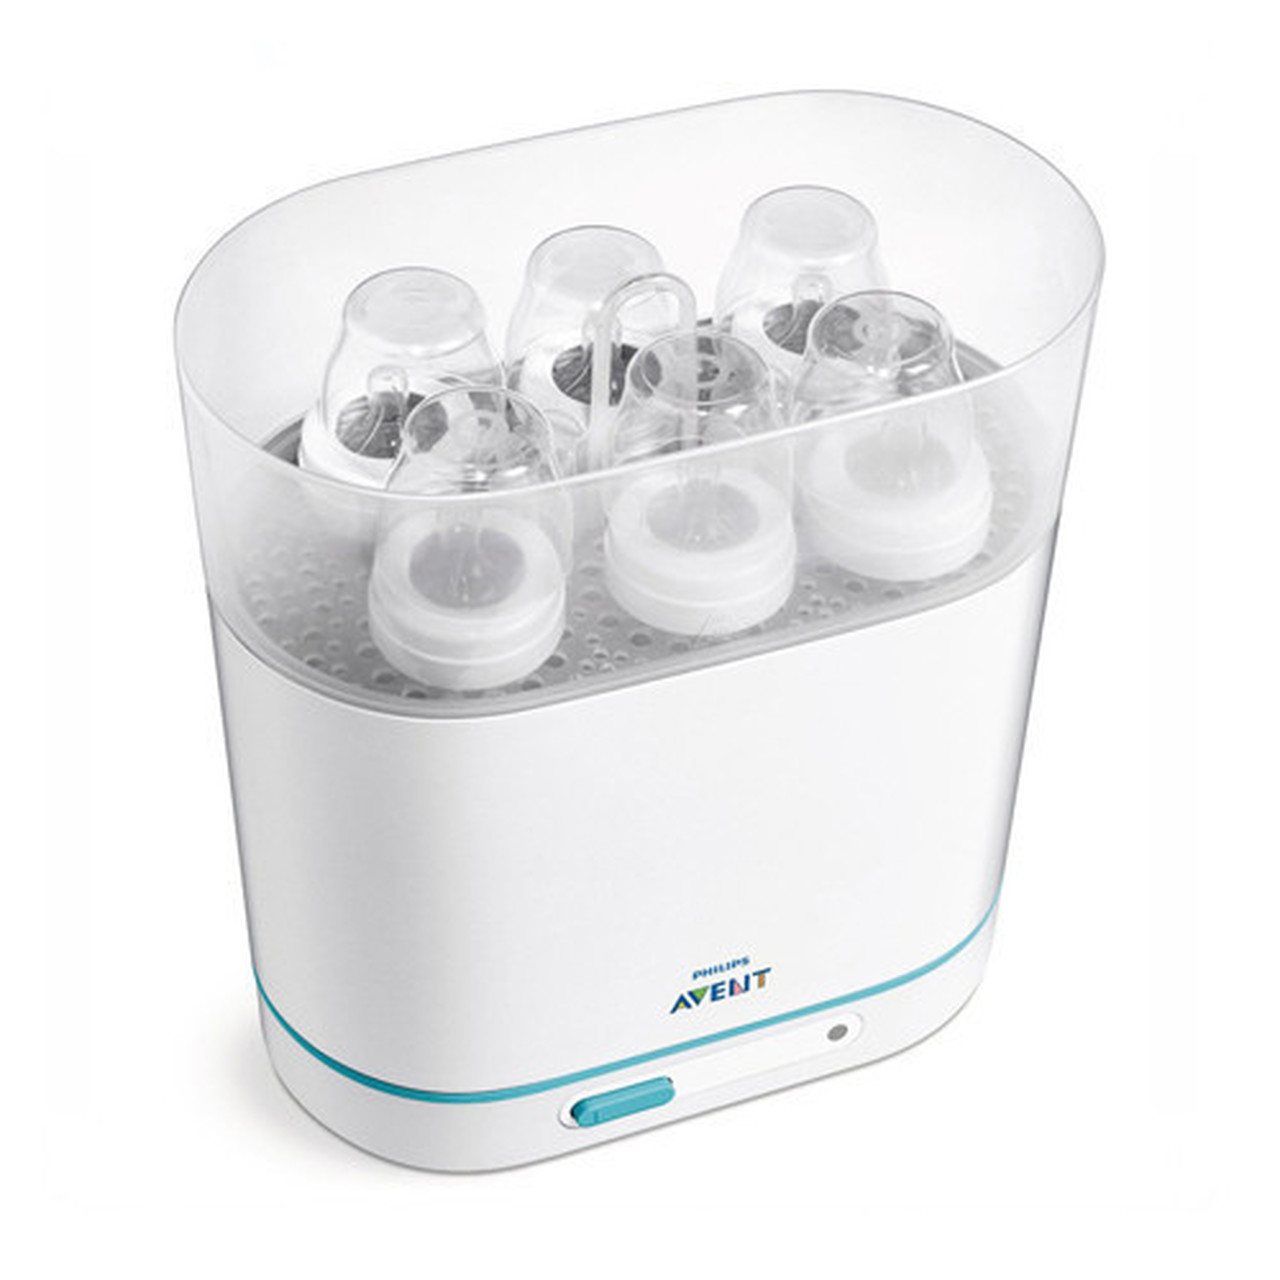 Philips AVENT 3-in-1 Steam Sterilizer Babies